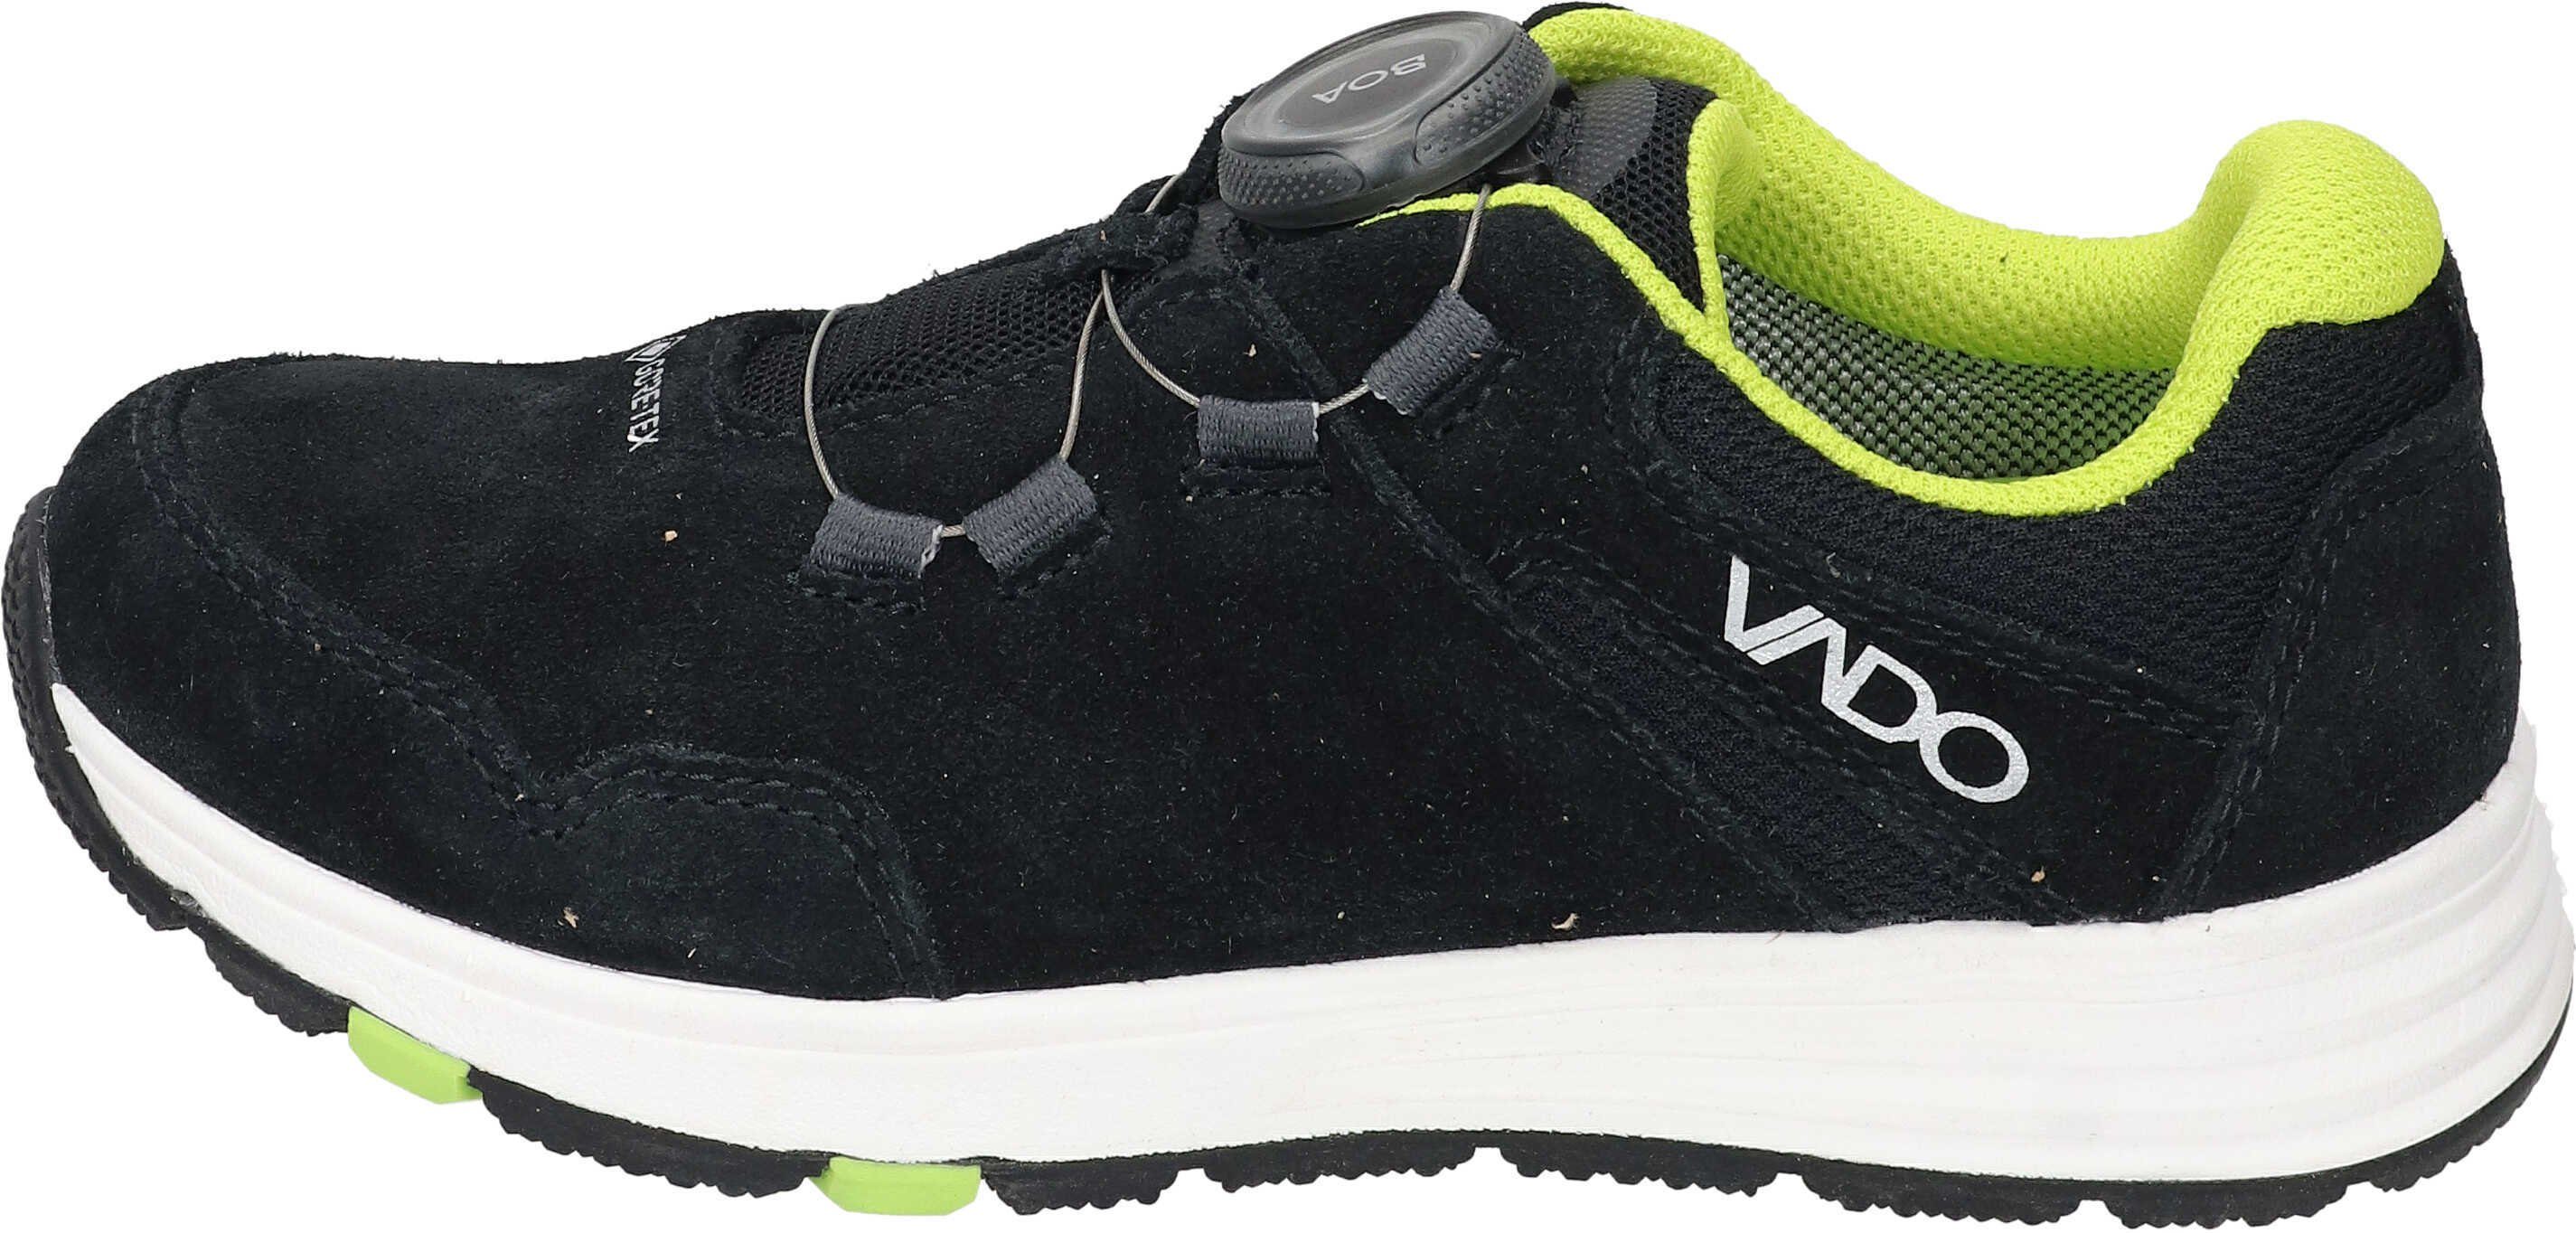 Vado Slipper Sneaker black mit GORE-TEX®